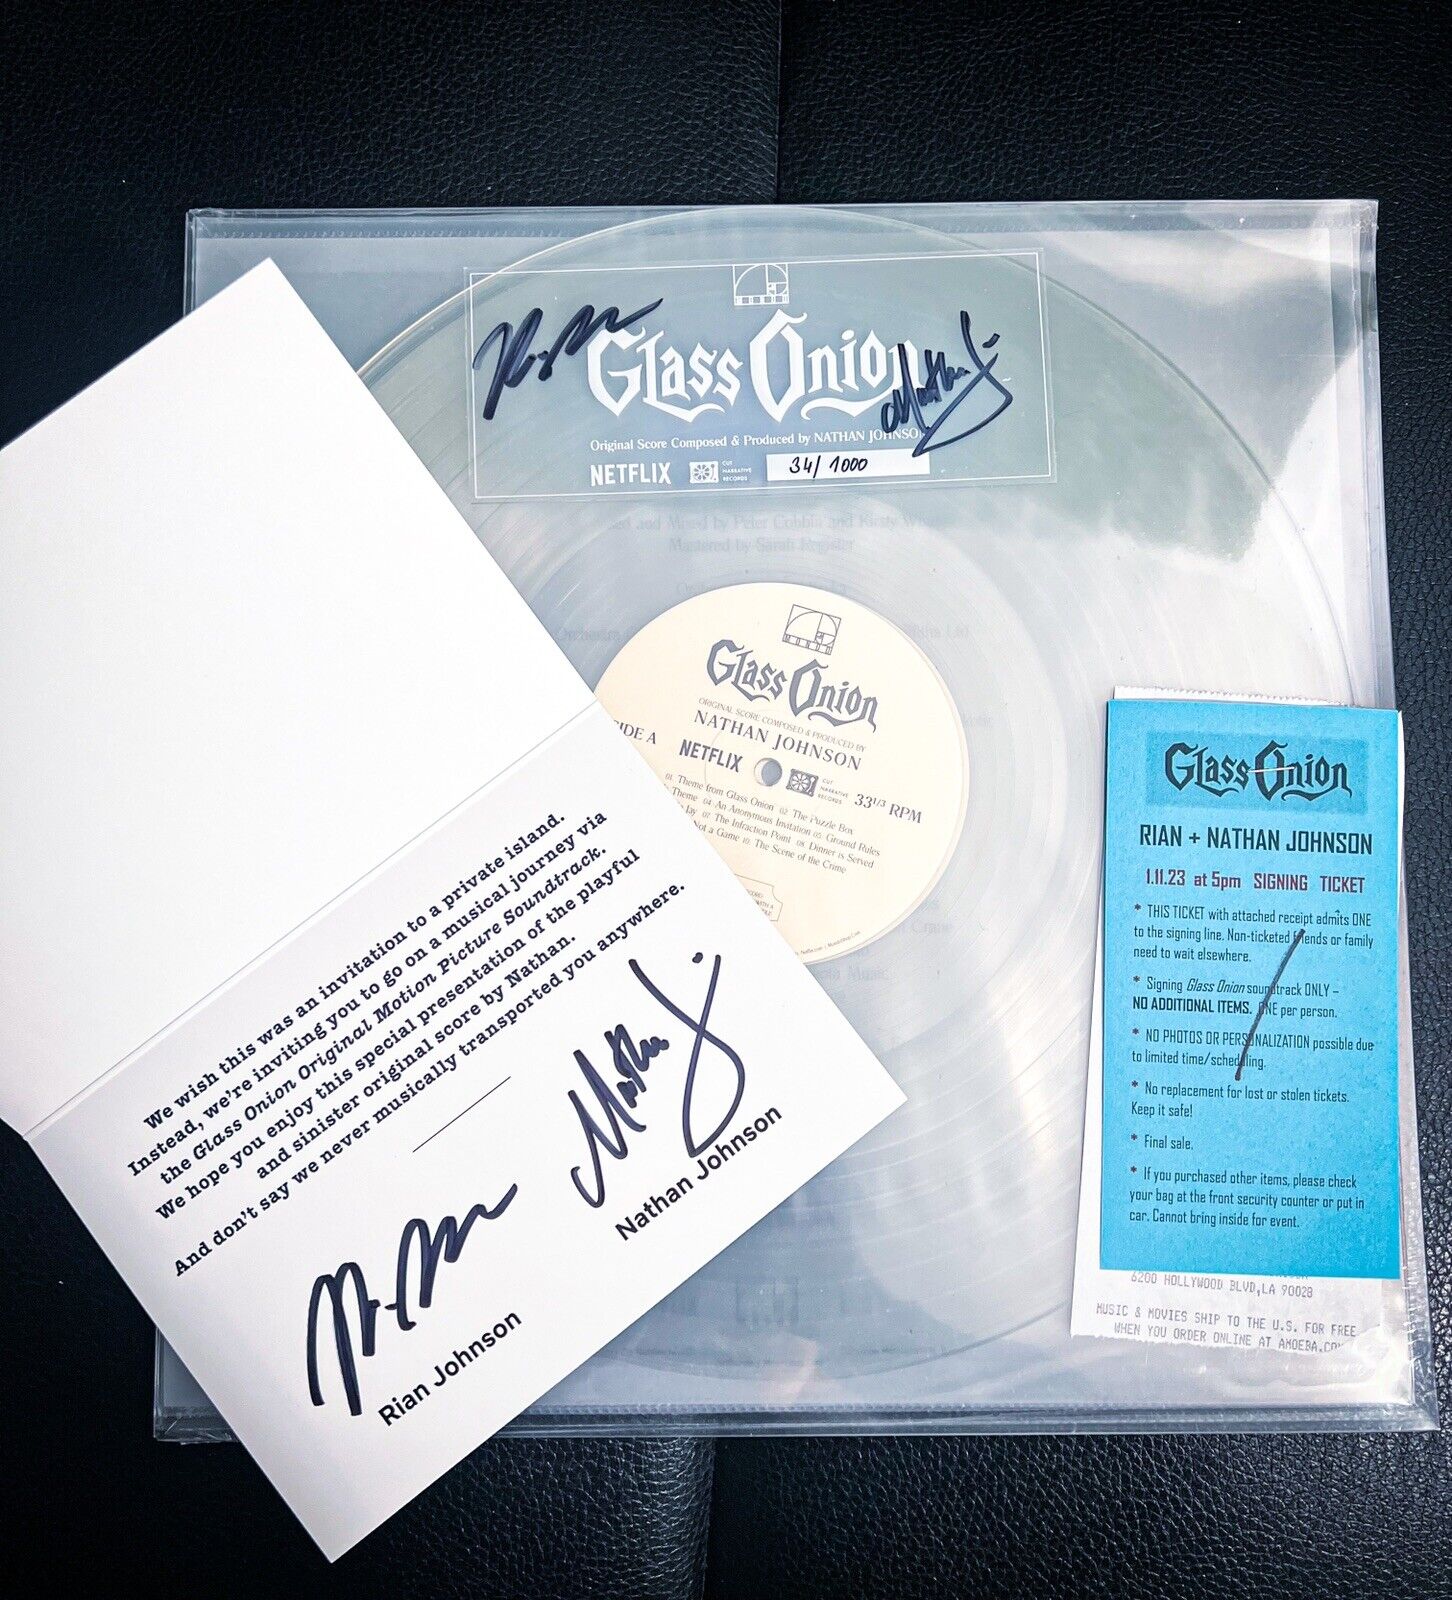 GLASS ONION - Original Motion Picture Soundtrack SIGNED #37/1000 Very Rare Vinyl